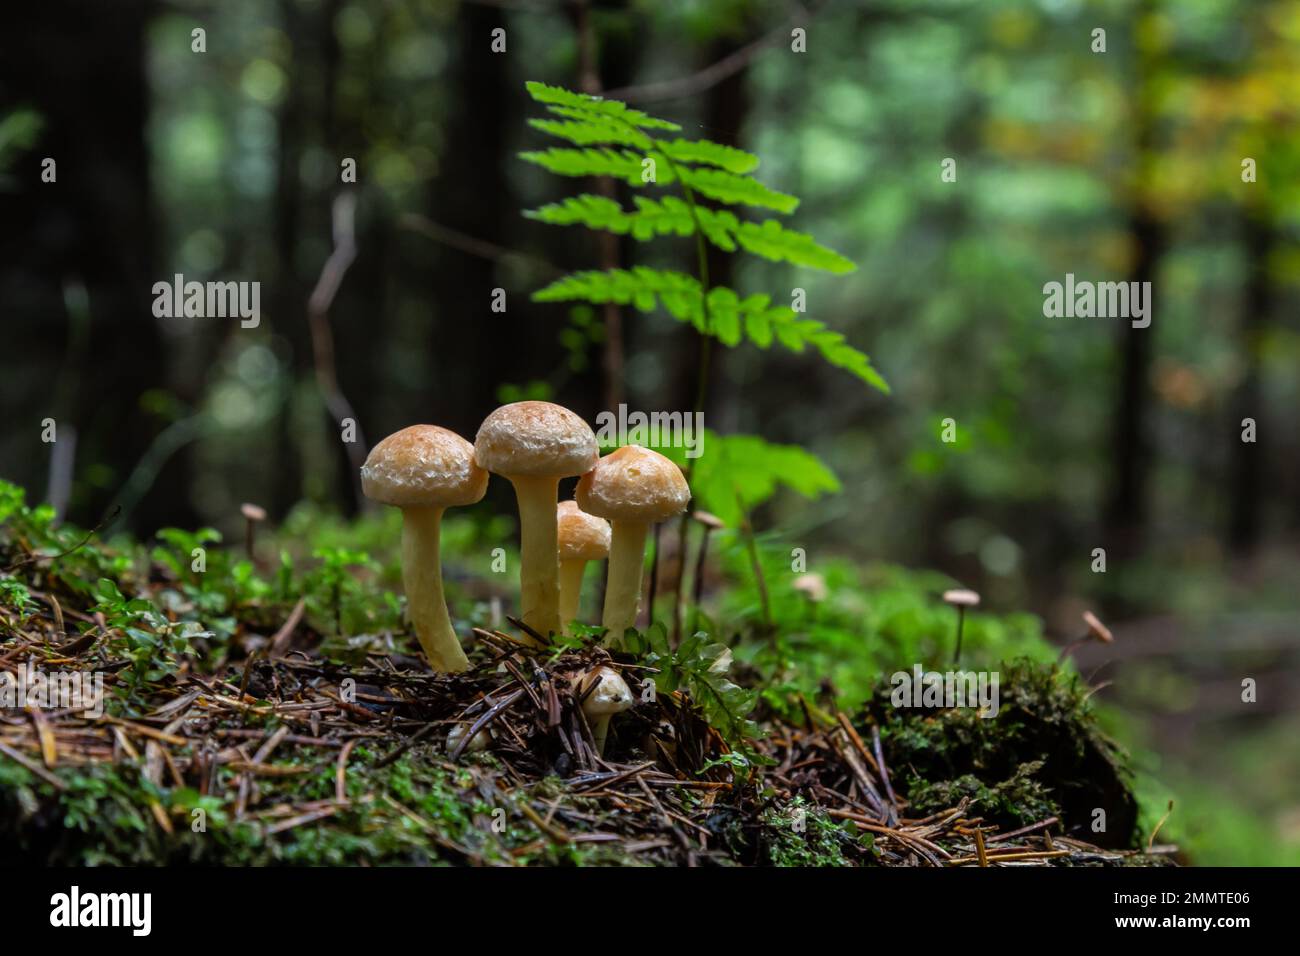 Armillaria mellea, commonly known as honey fungus, is a basidiomycete fungus in the genus Armillaria. Beautiful edible mushroom. Stock Photo